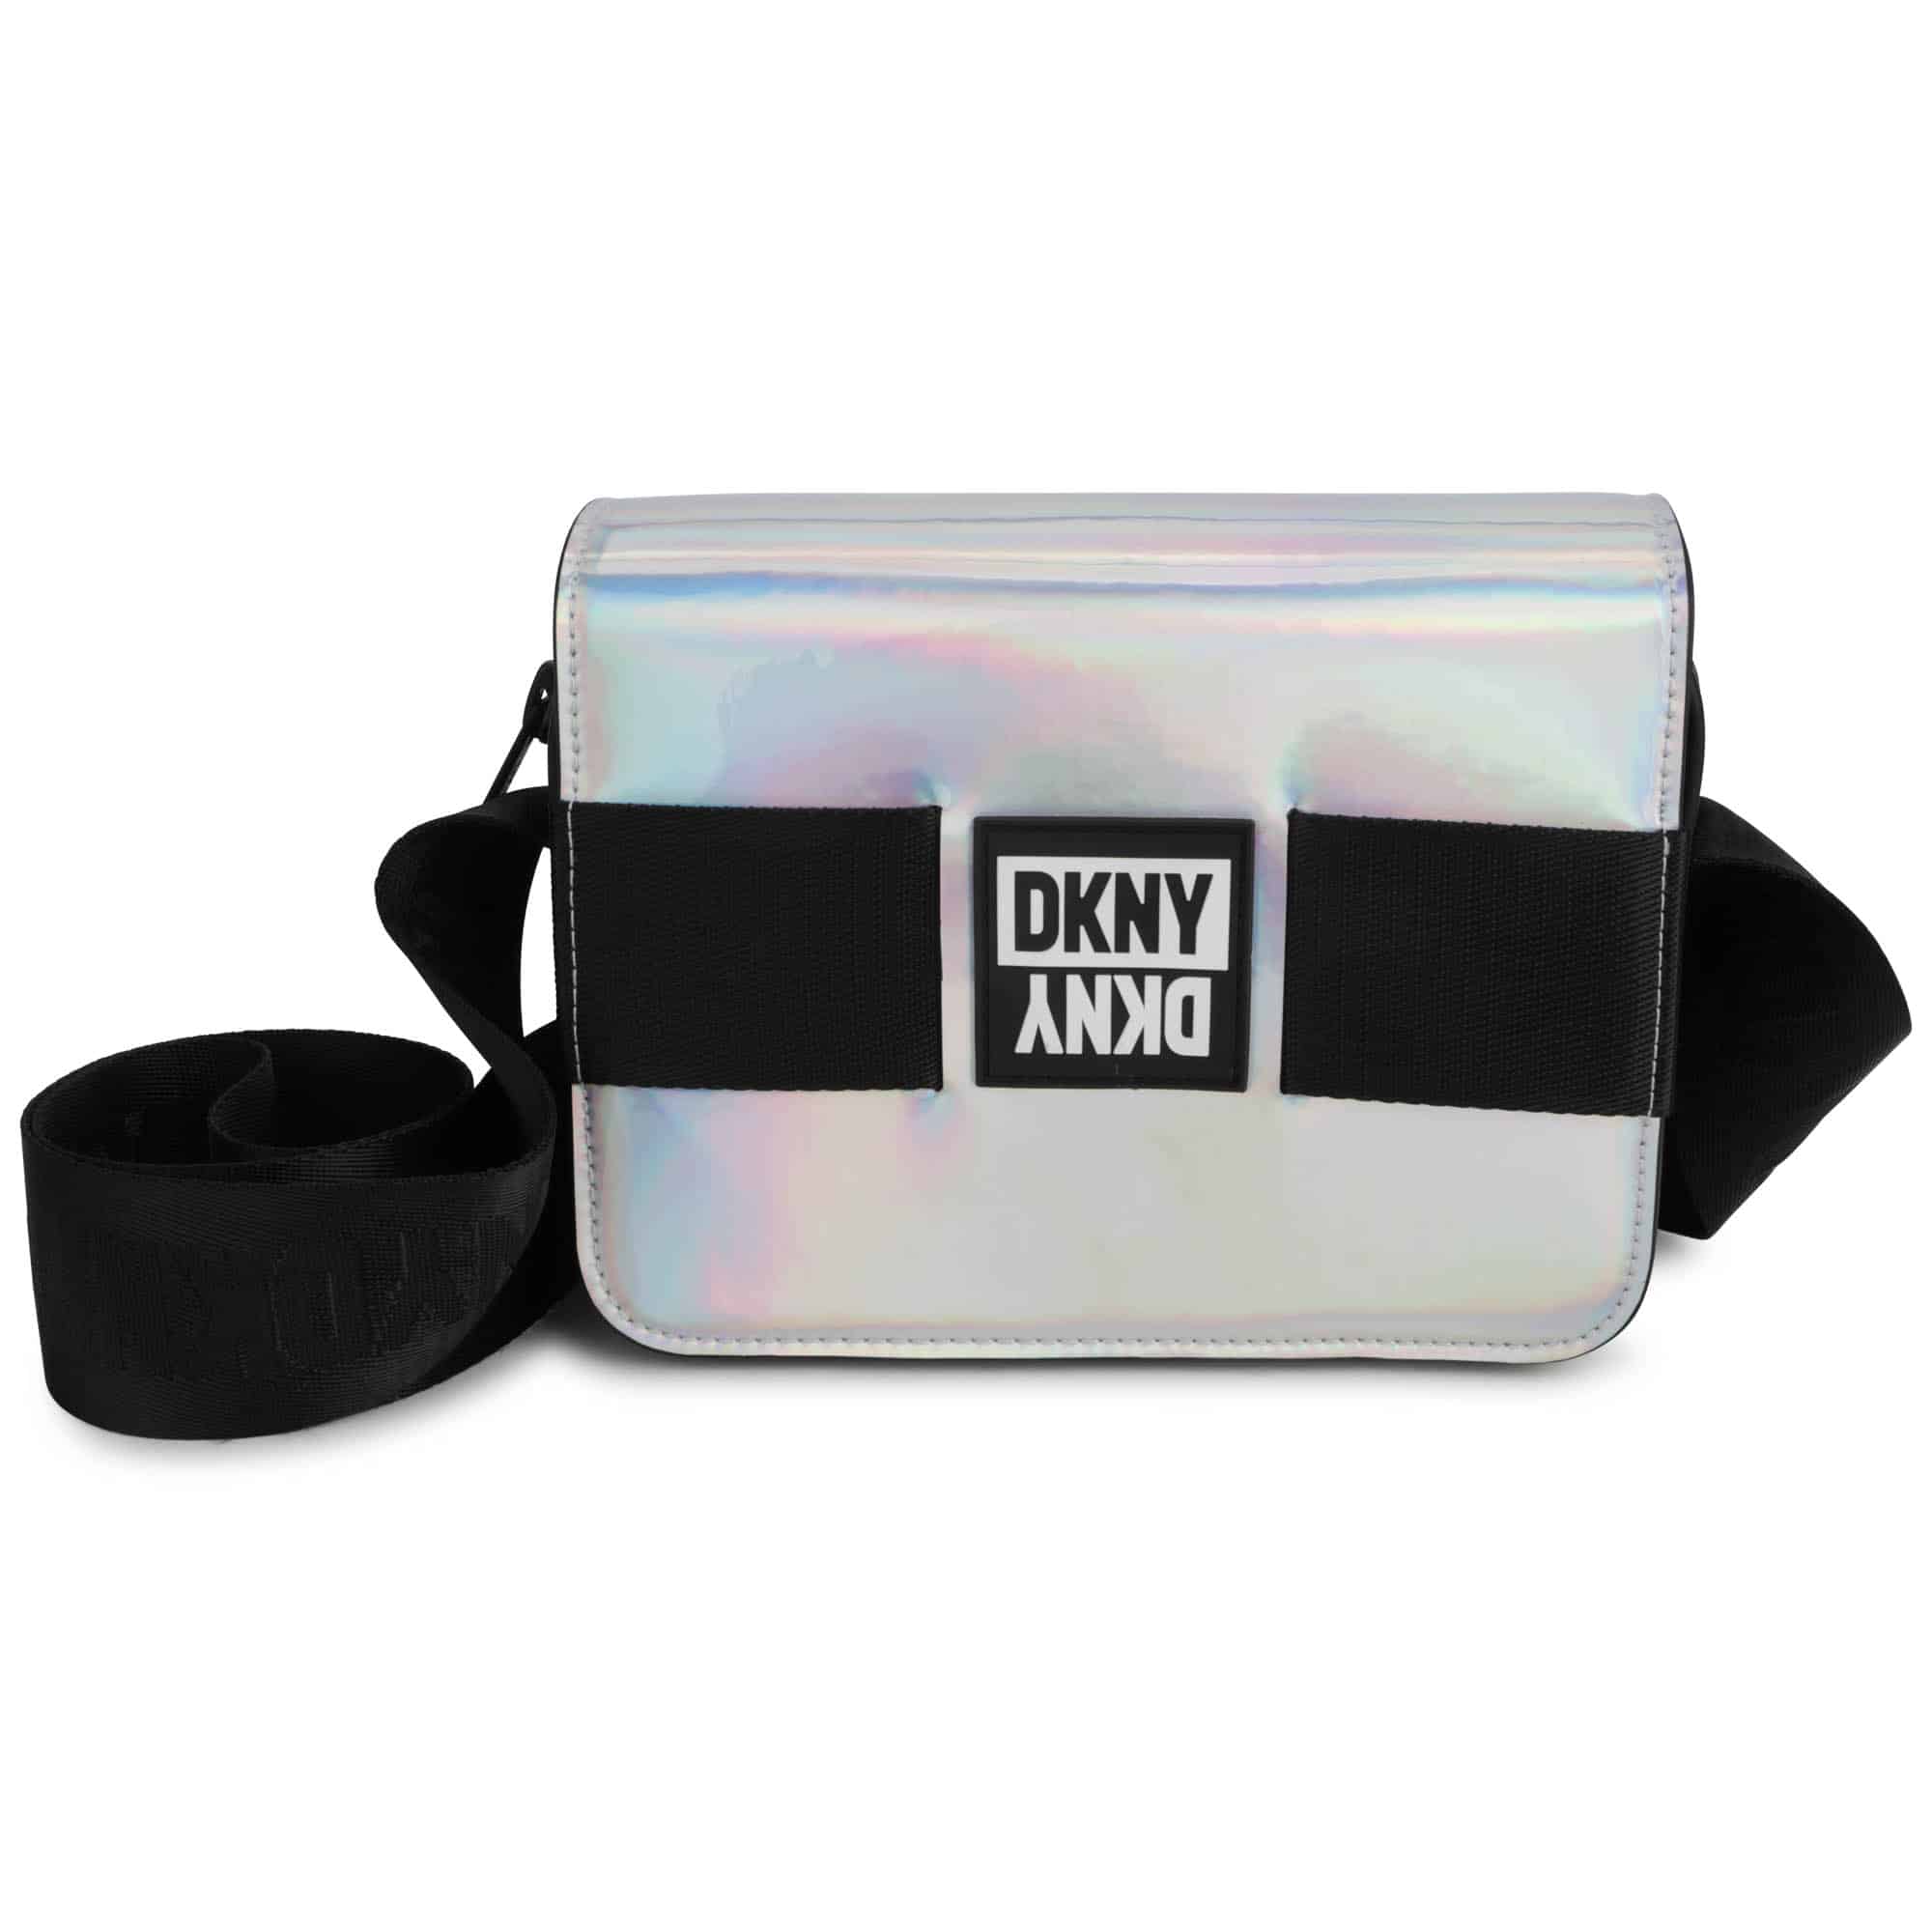 DKNY girls silver handbag with white logo